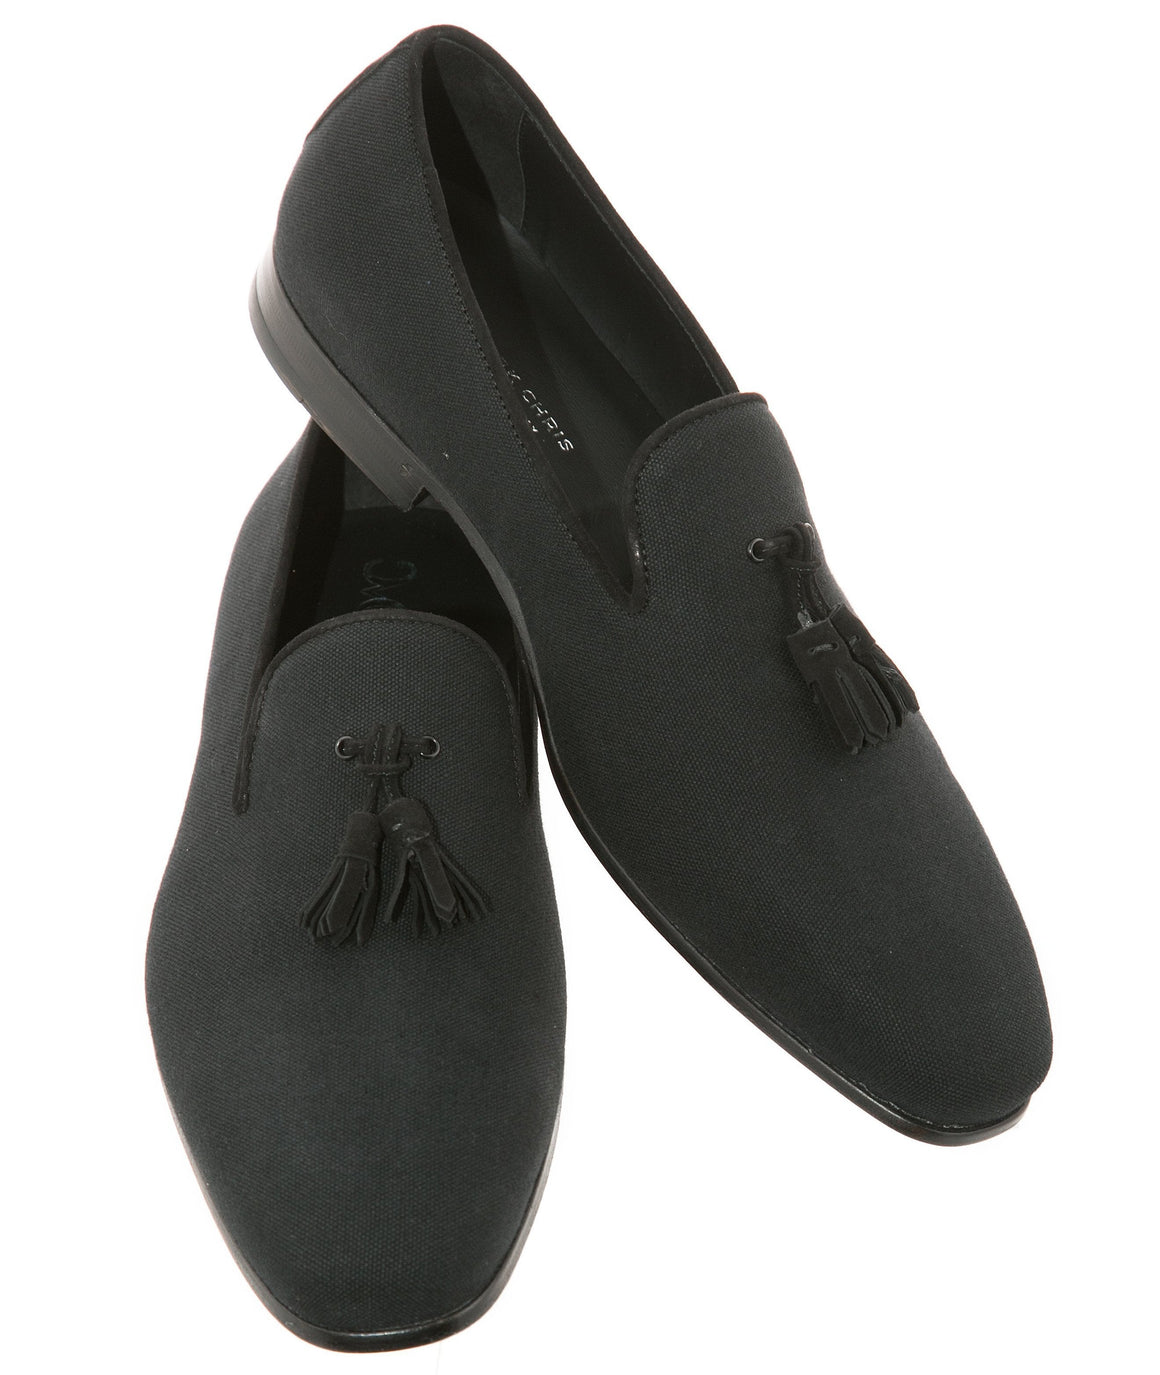 Classico - Black - Mark Chris Shoes